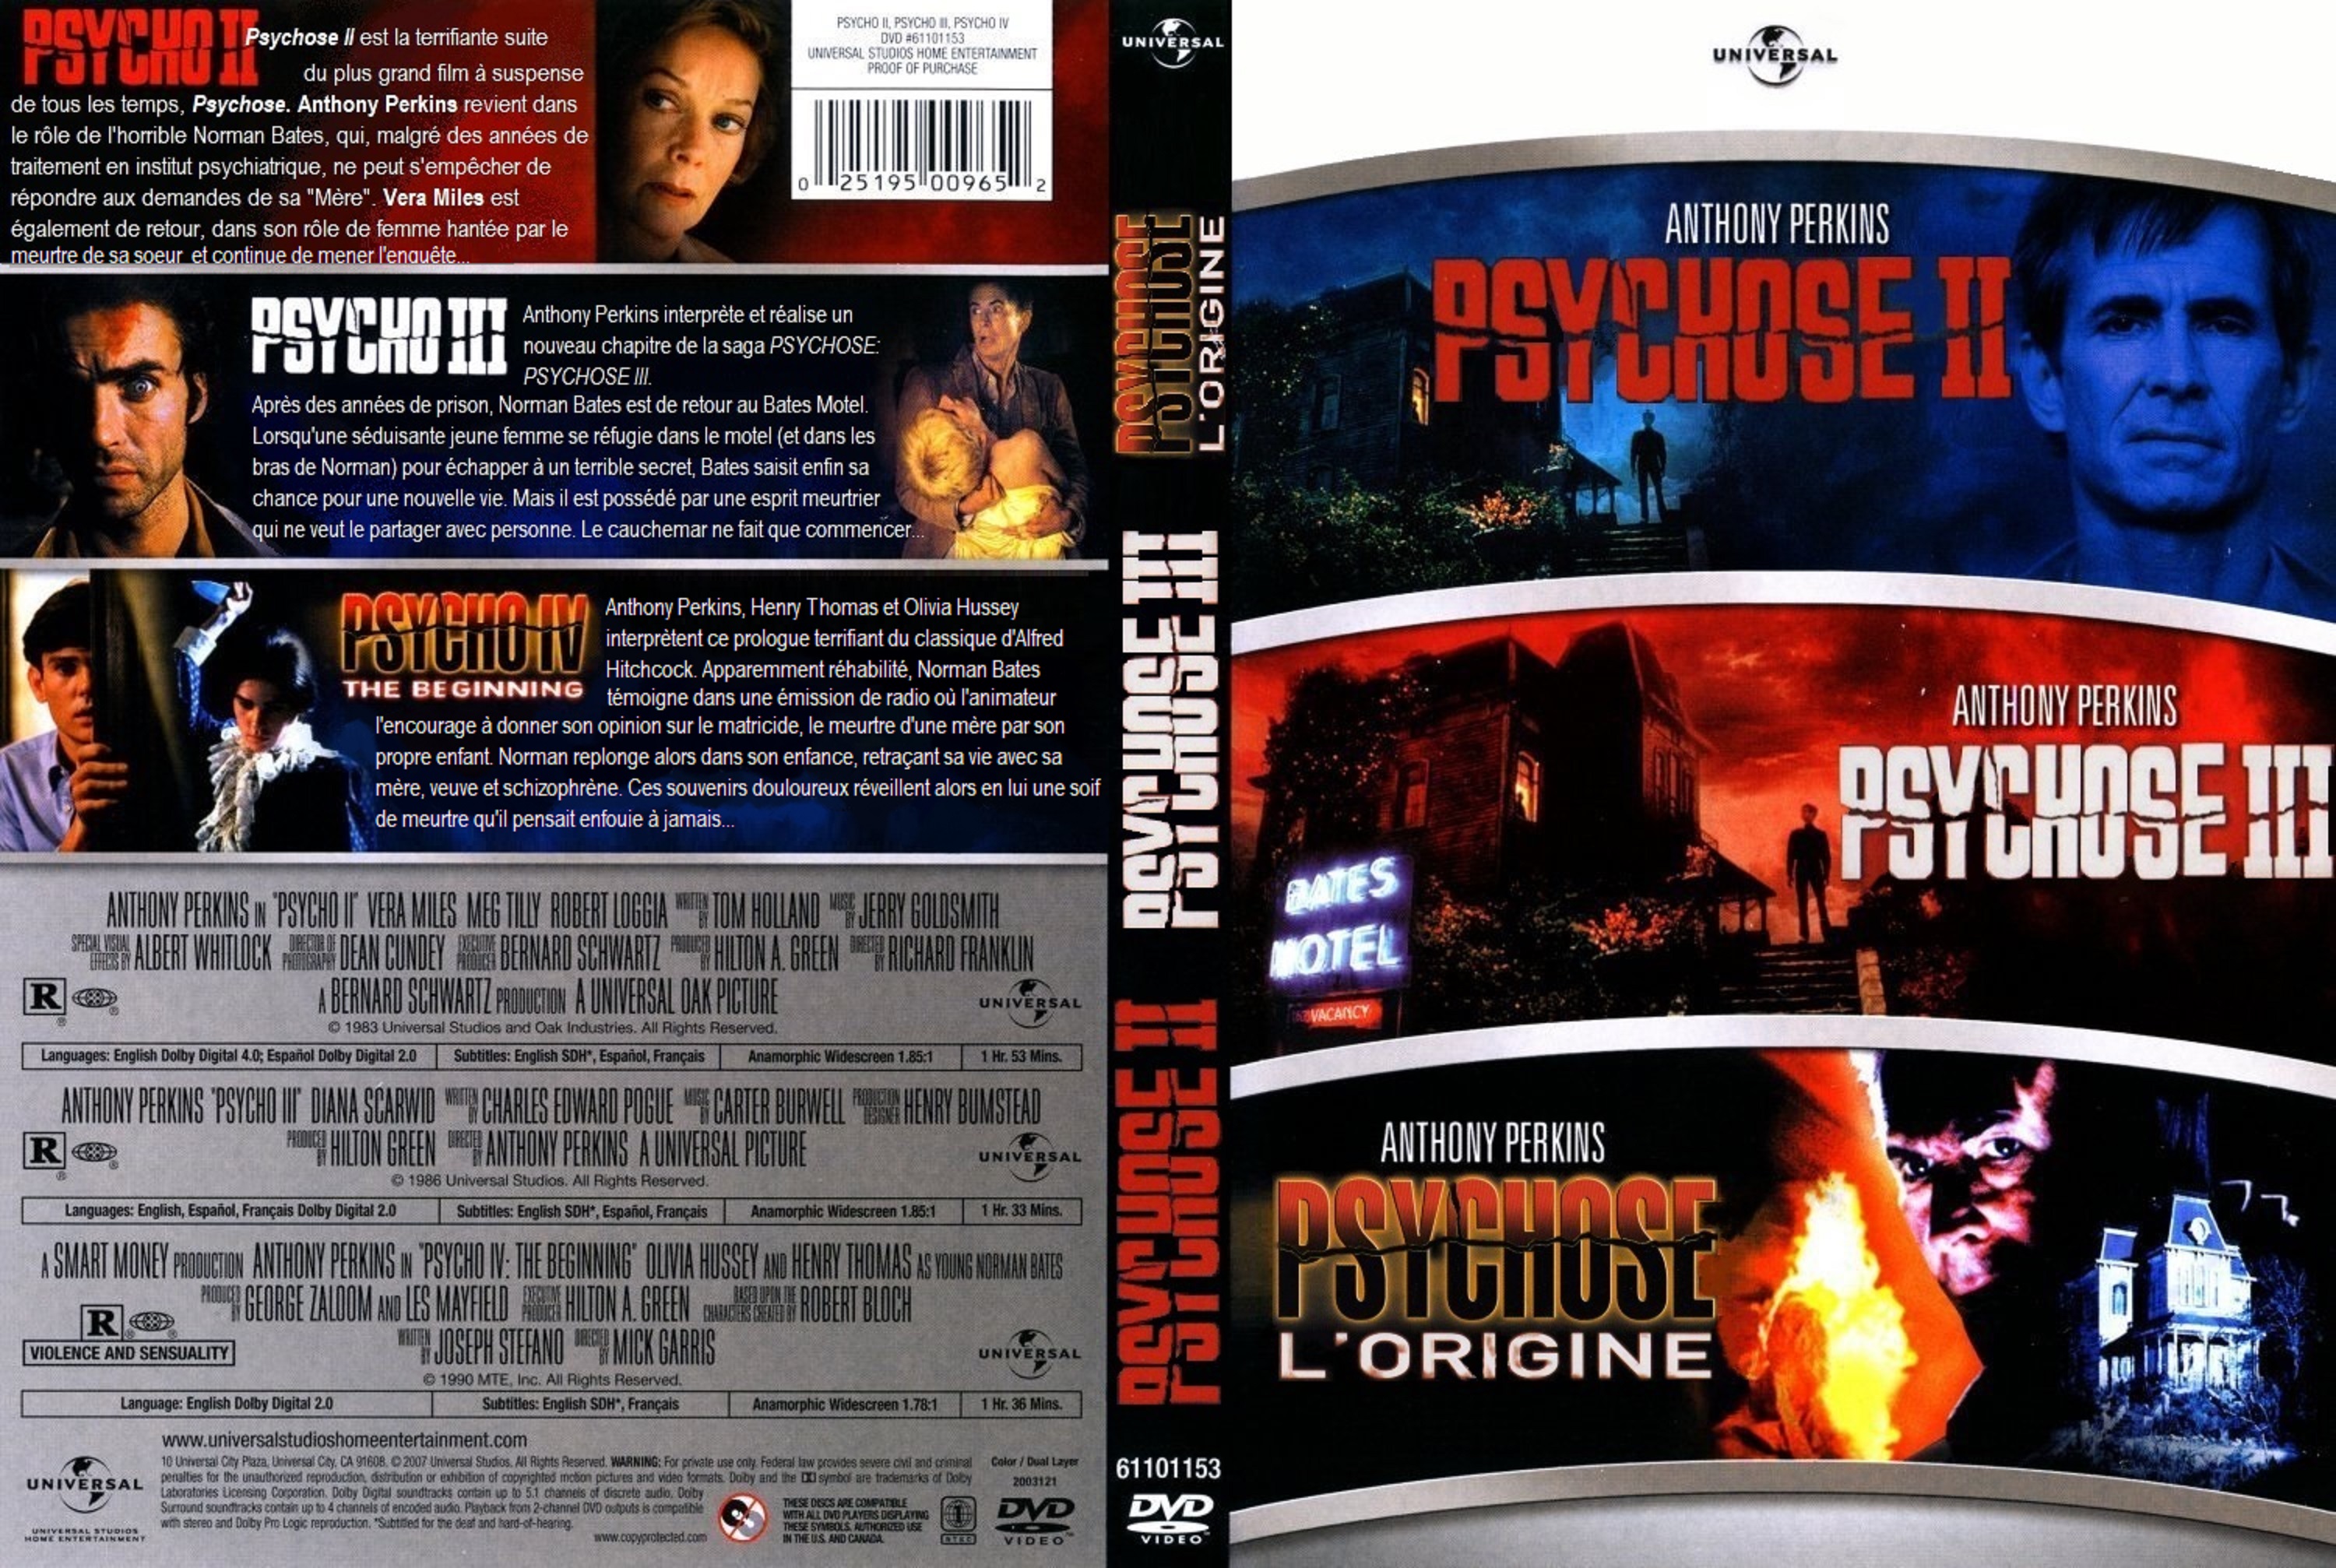 Jaquette DVD Psychose II III IV custom